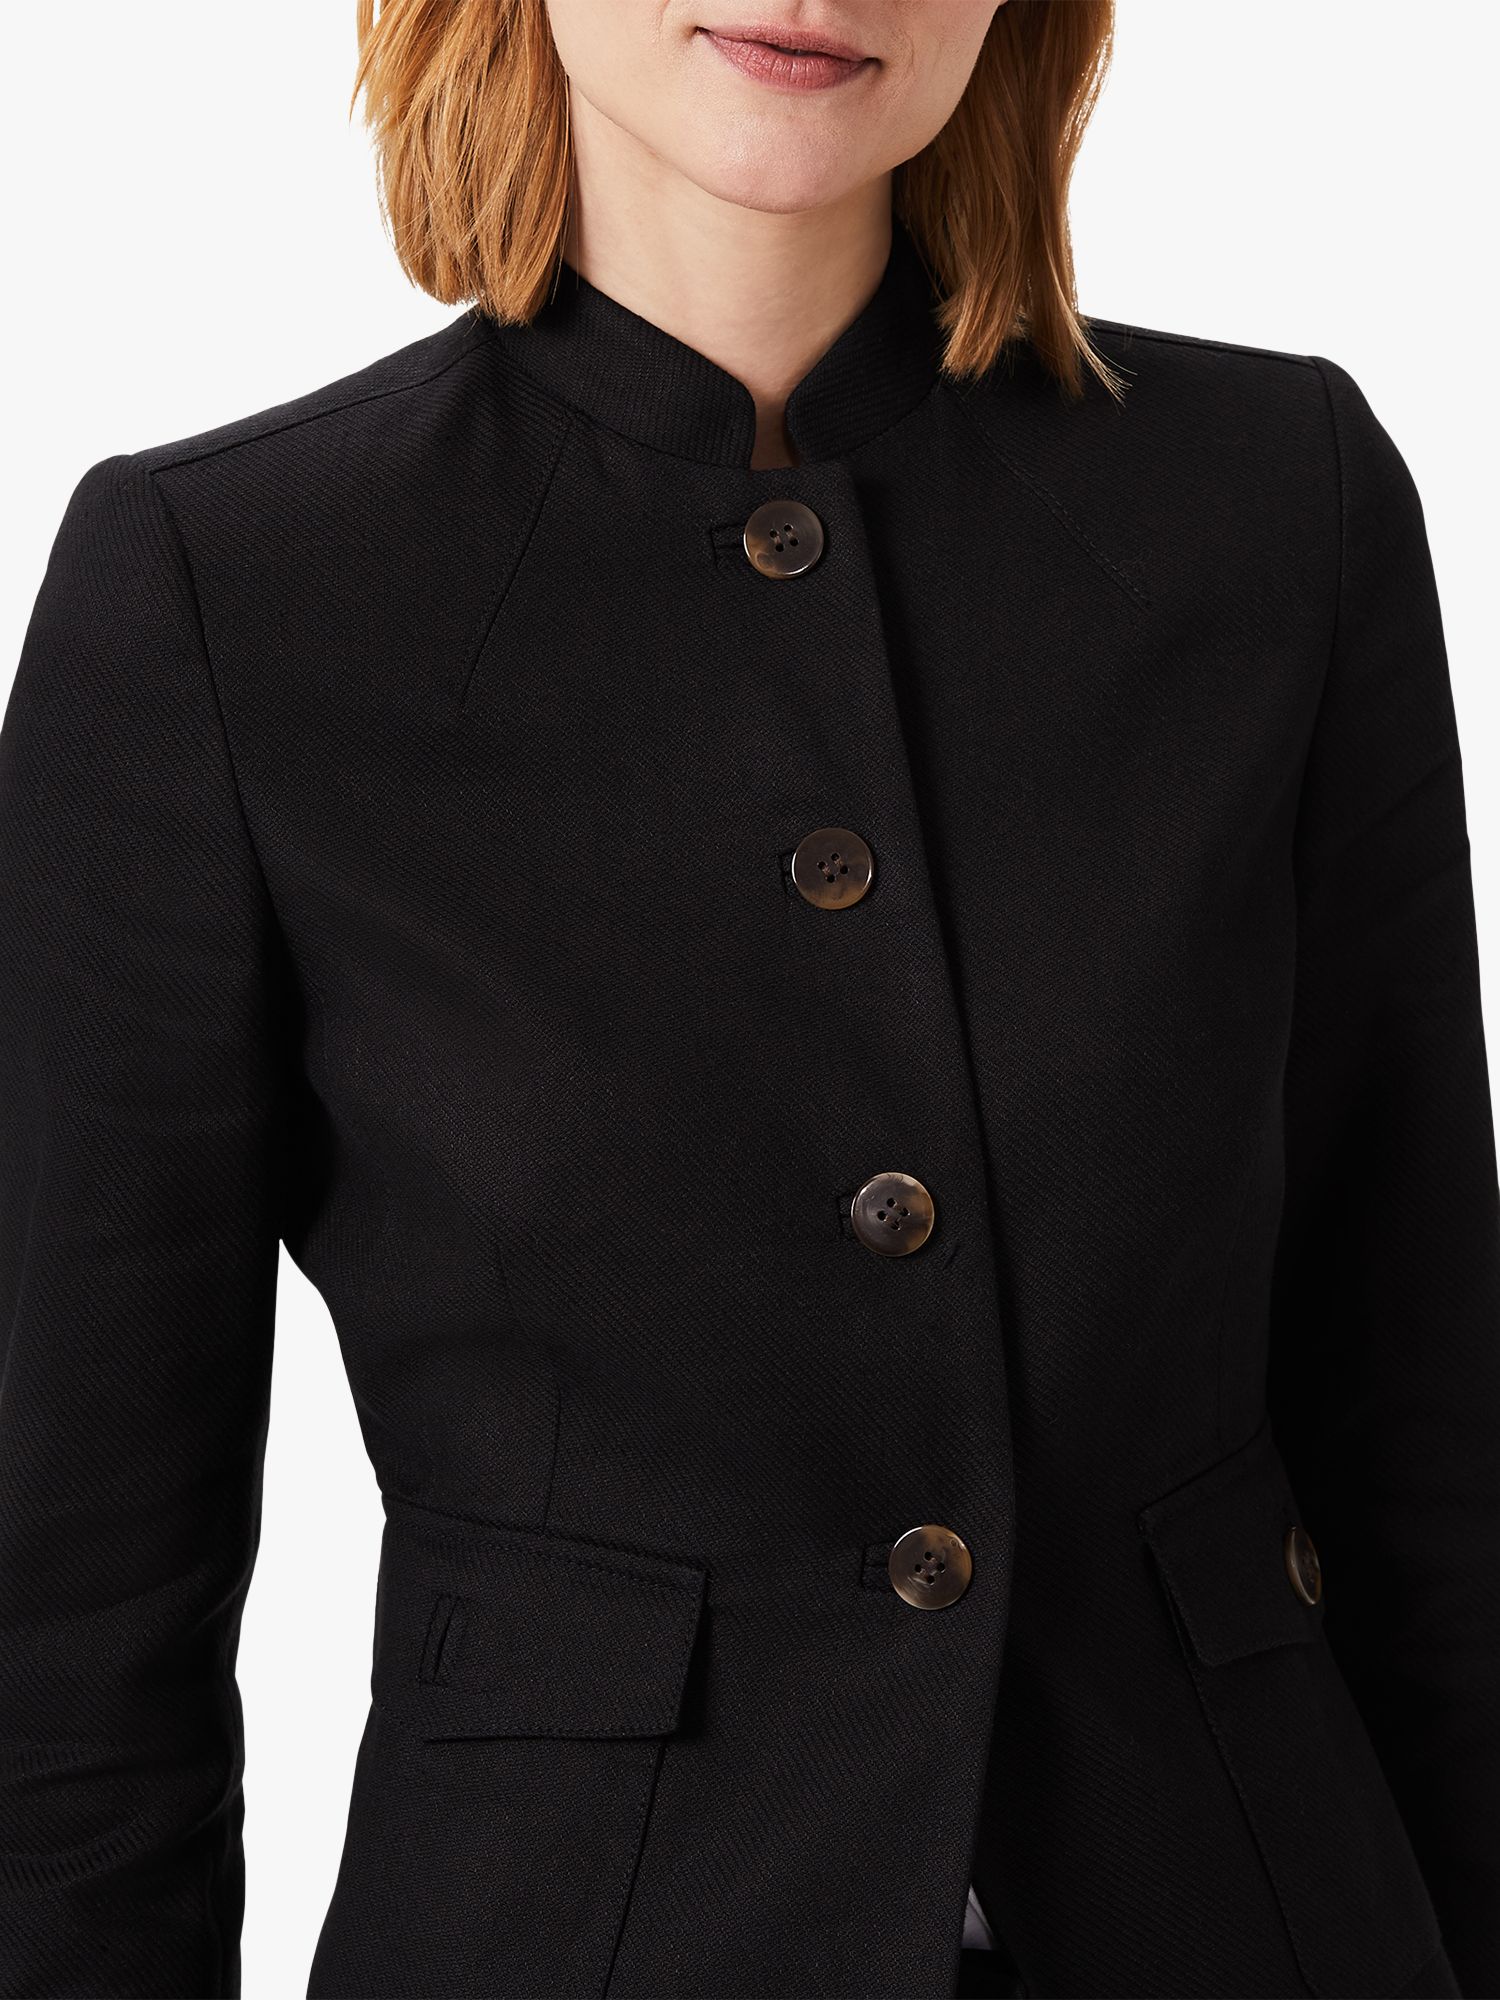 Hobbs Linen Blazer Jacket, Black at John Lewis & Partners